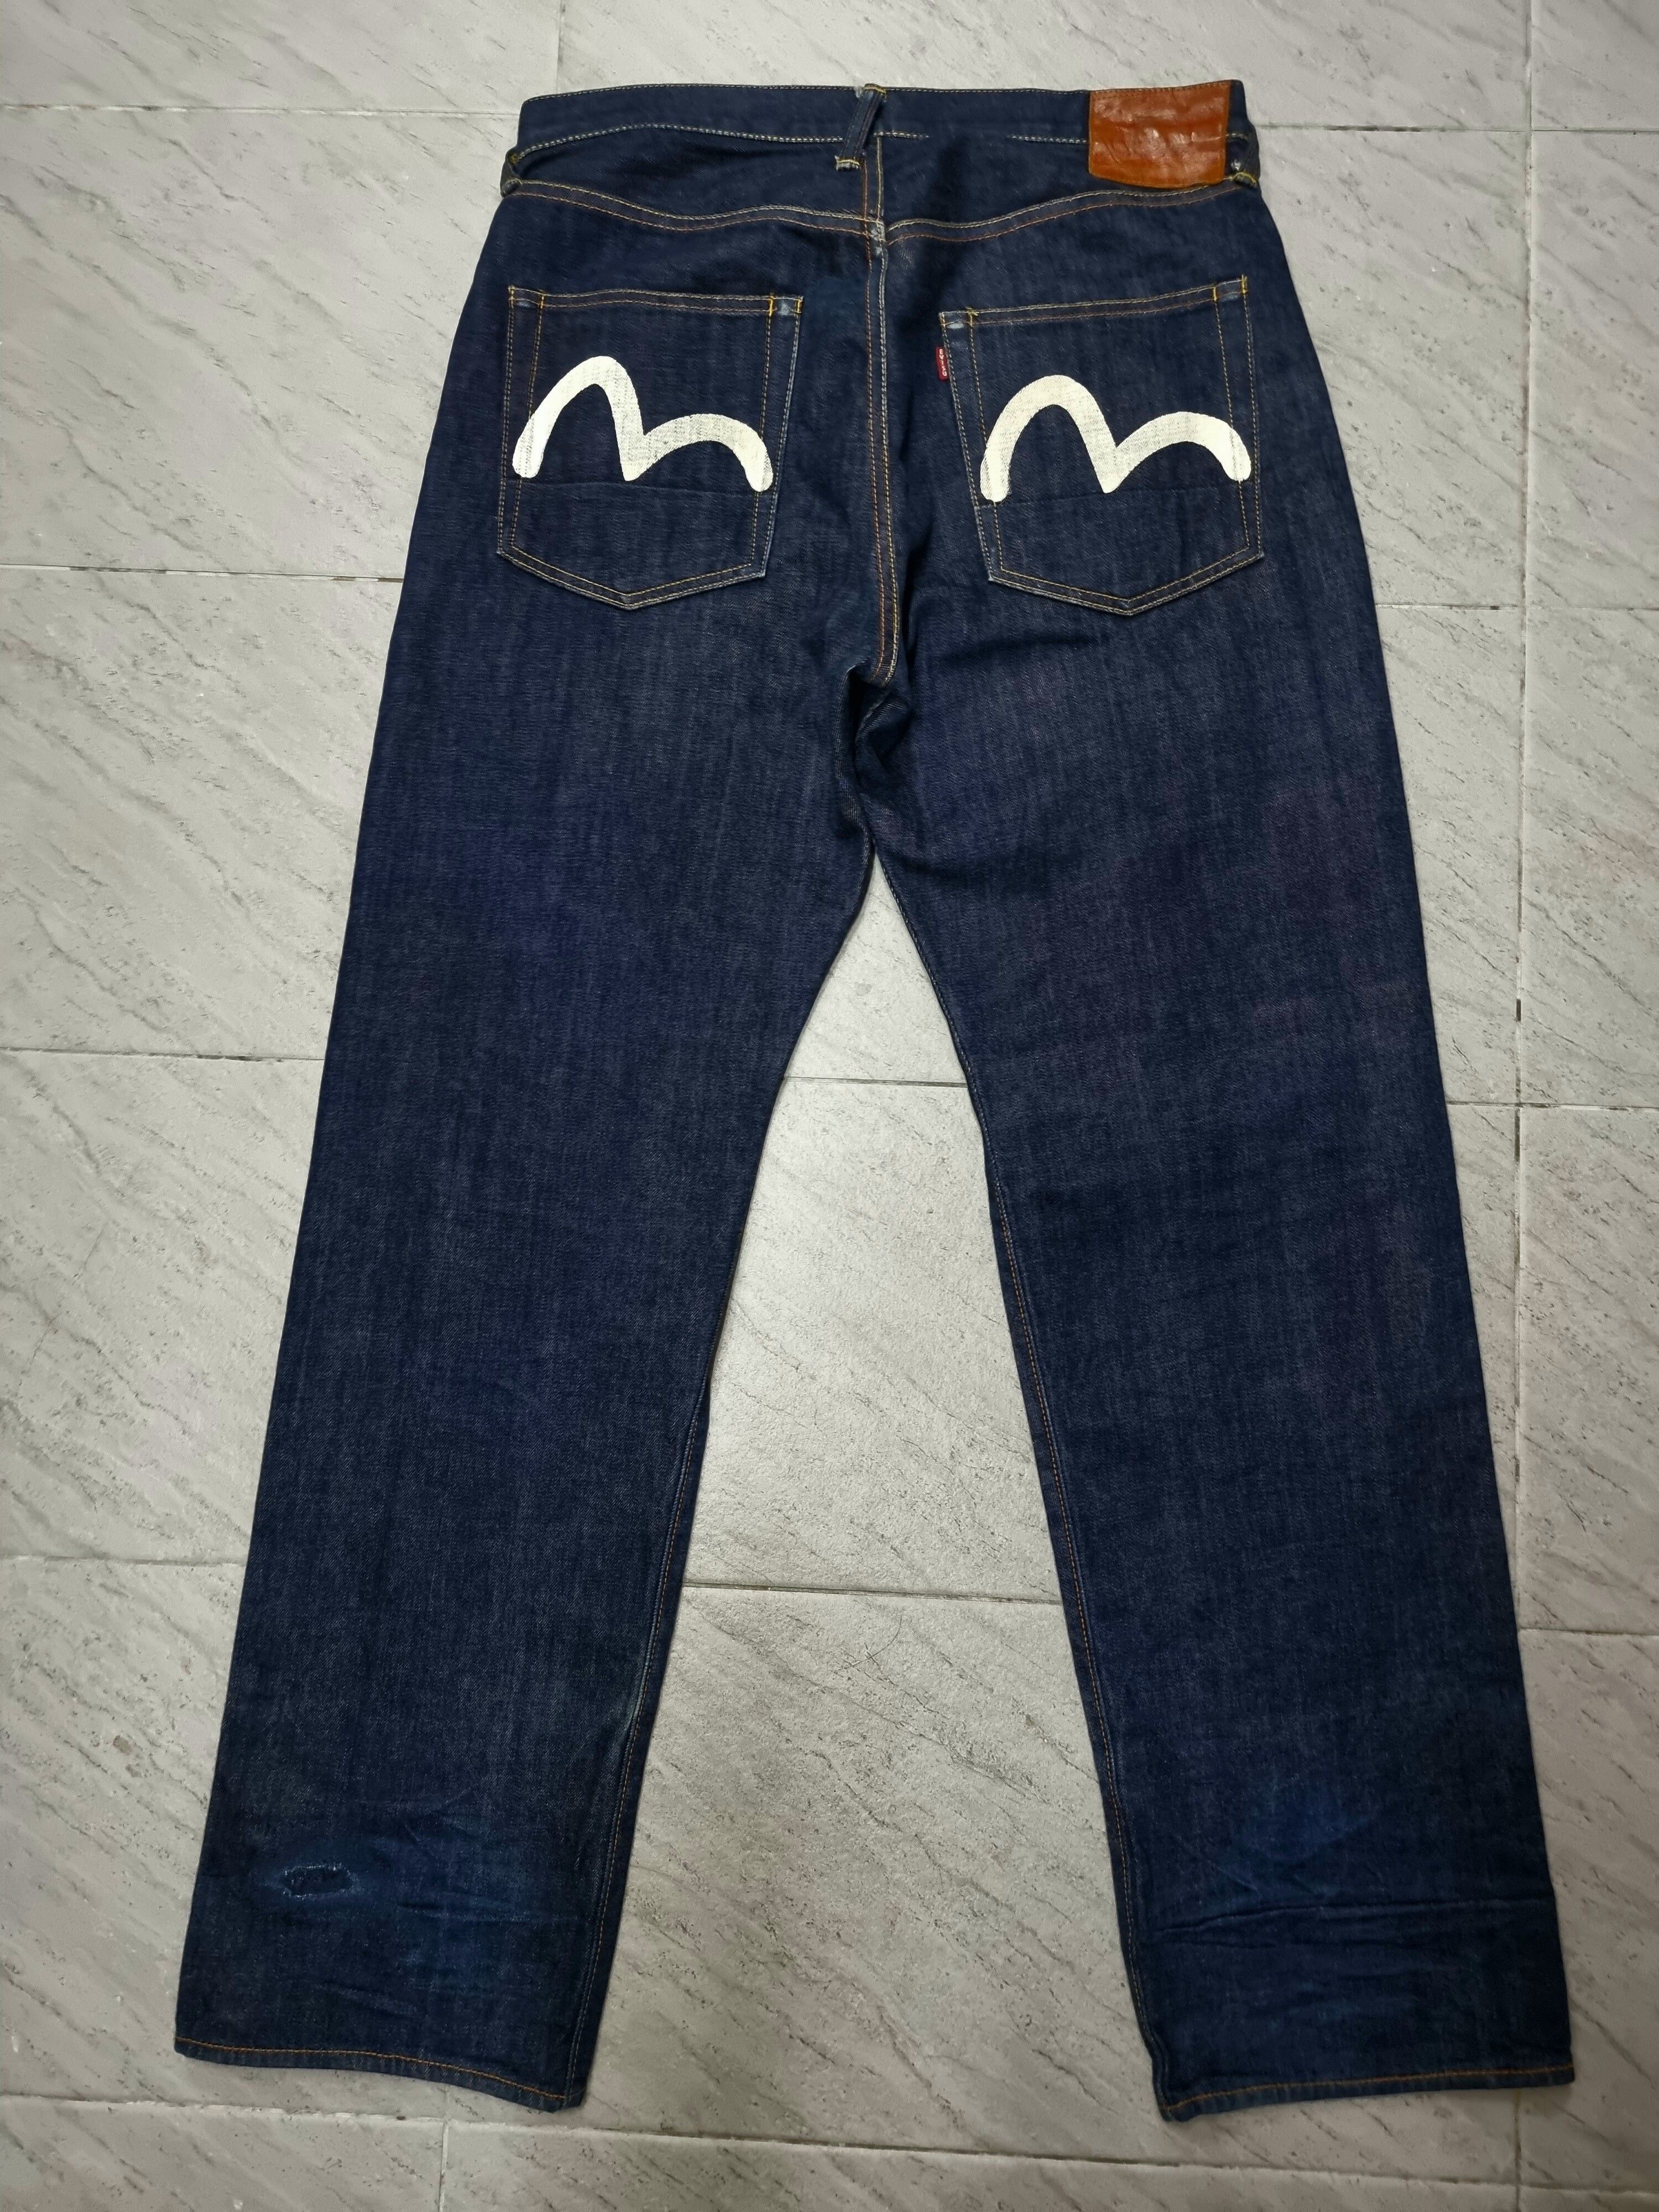 Vintage Evisu No 2 Evis Size 35x35 Jeans Japan levis adidas north 